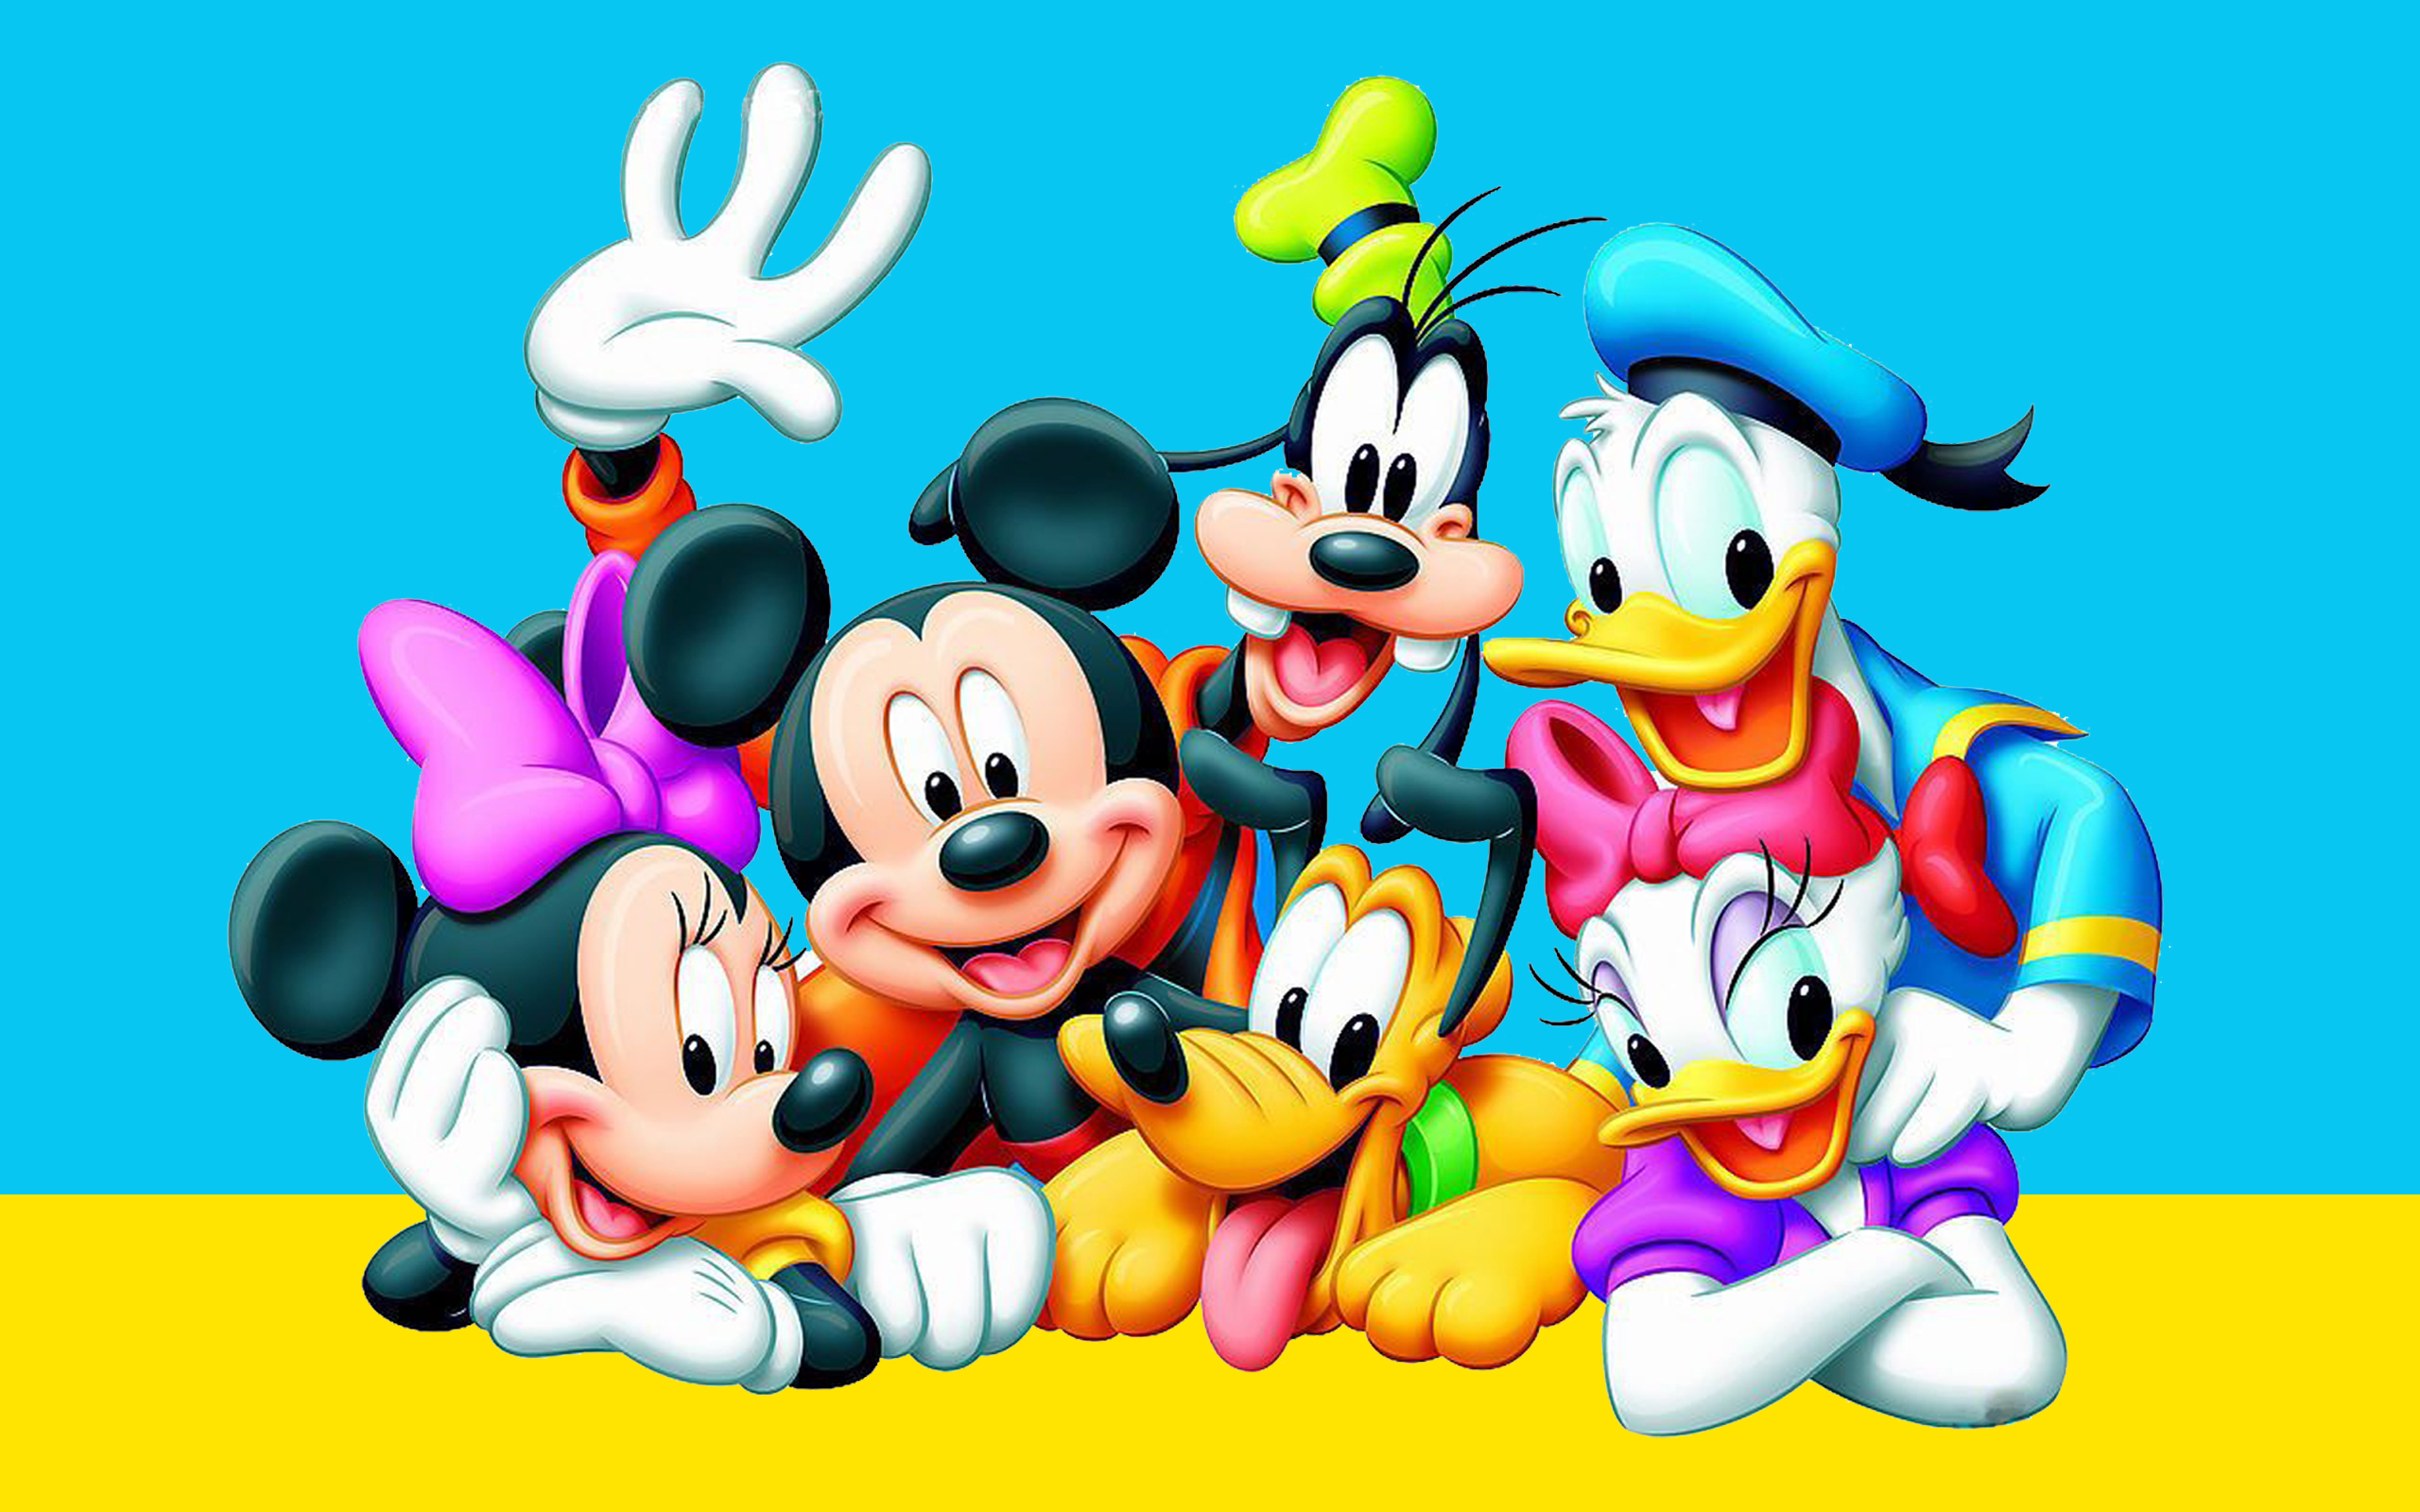 Donald-Duck-Daisy-Duck-Mickey-Mouse-Goofy-and-Pluto-Cartoon-Wallpaper-Hd-2560x1600